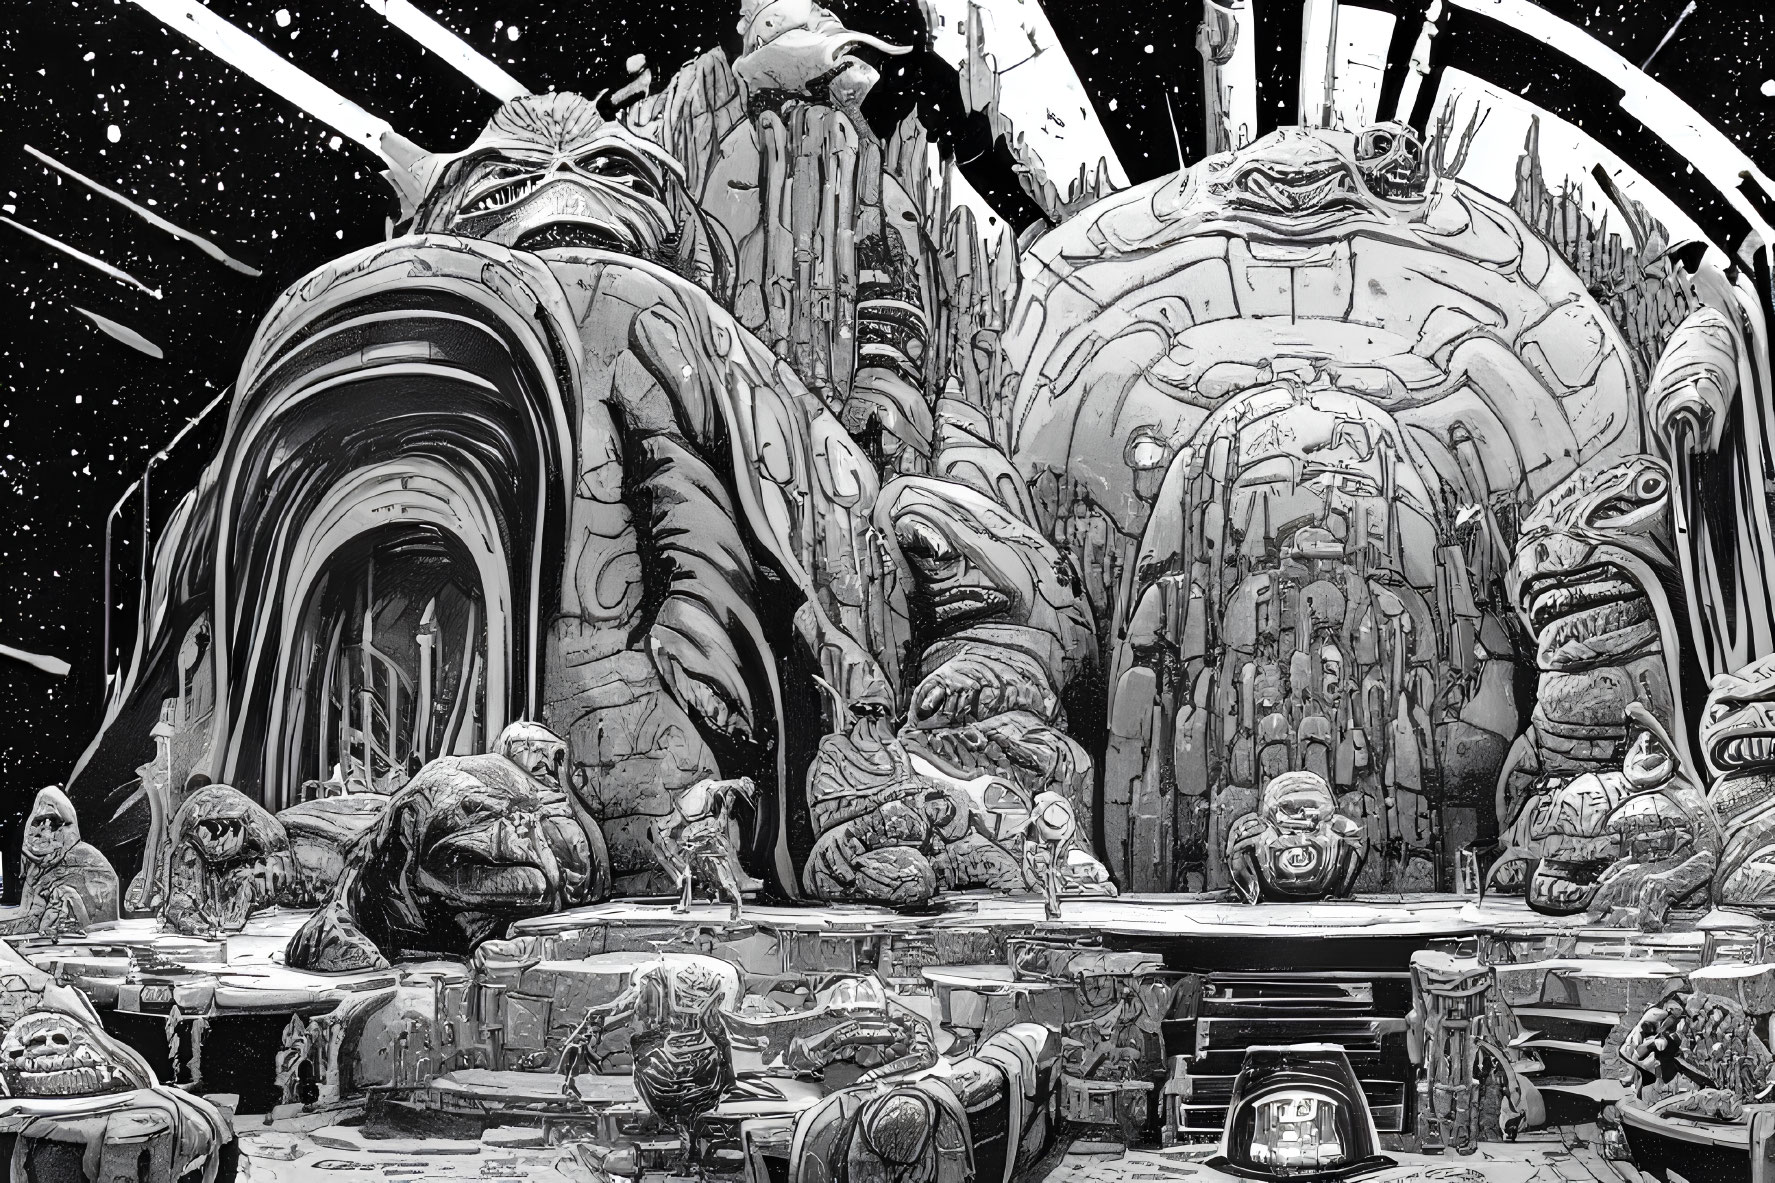 Monochrome sci-fi illustration: alien creatures in domed structure.